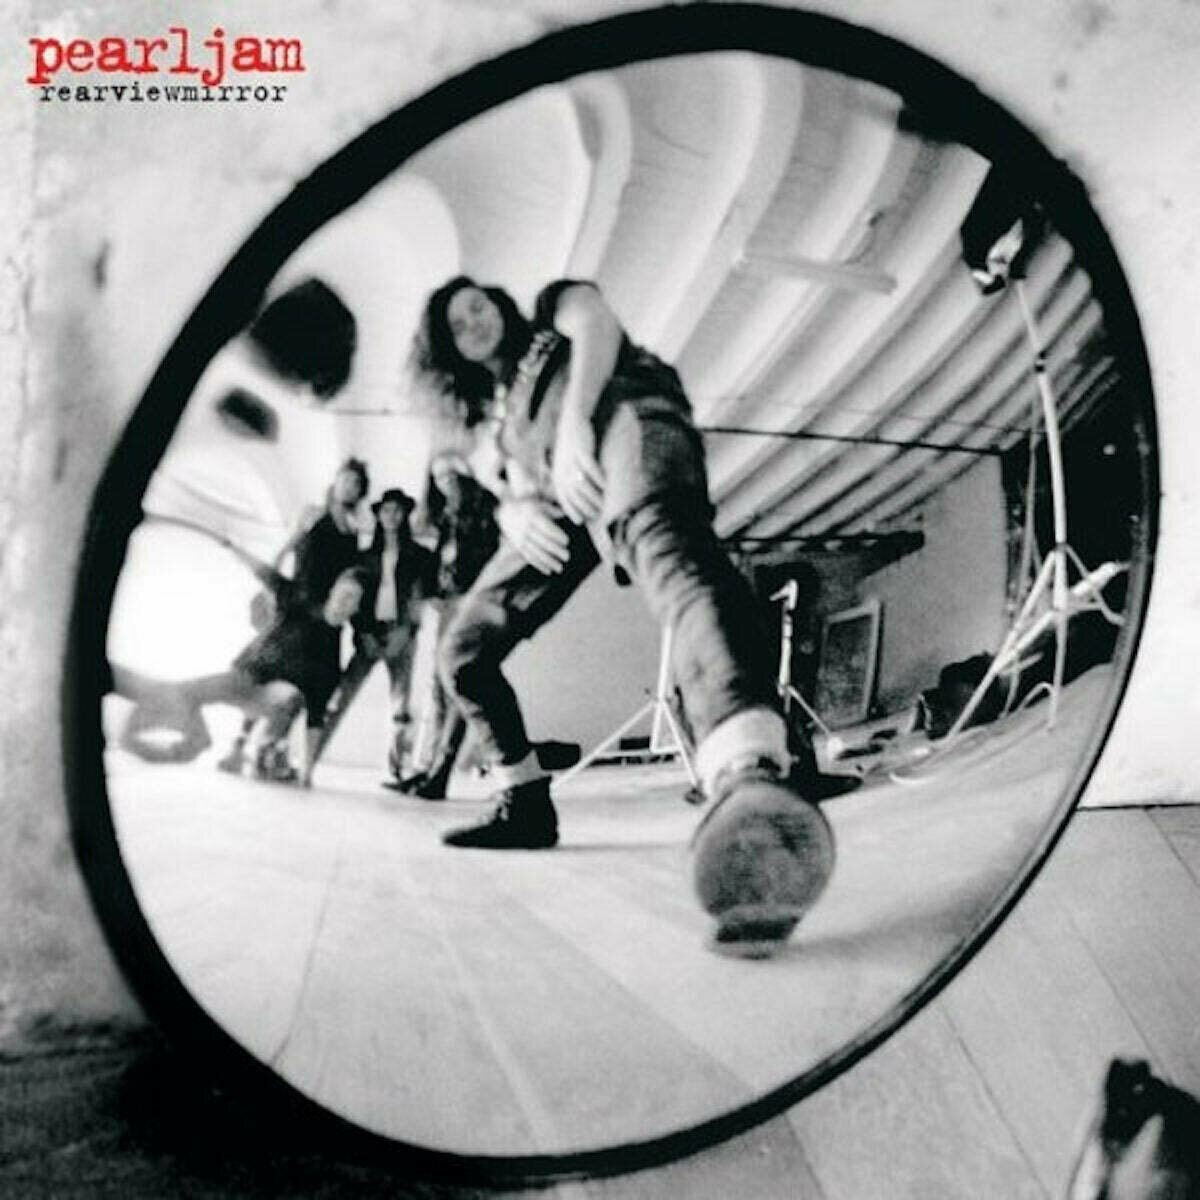 Płyta winylowa Pearl Jam - Rearviewmirror (Greatest Hits 1991-2003) (2 LP)